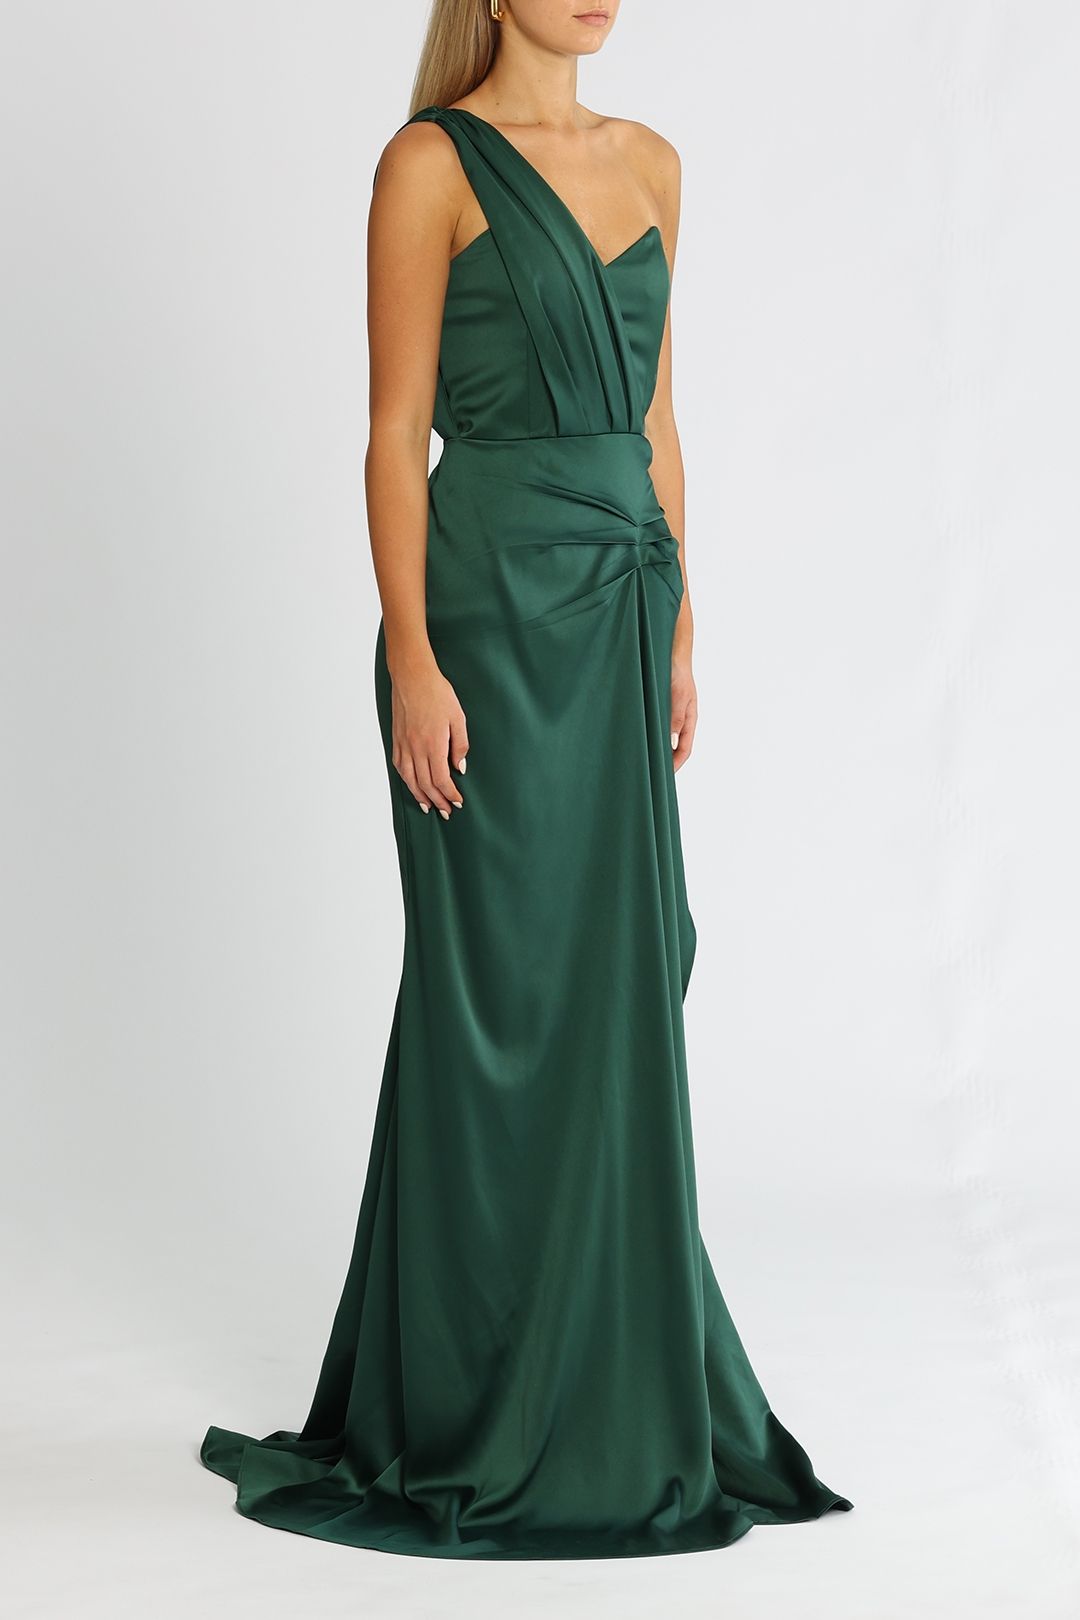 Elle Zeitoune One Shoulder Emerald Gown Forest Green Floor Length